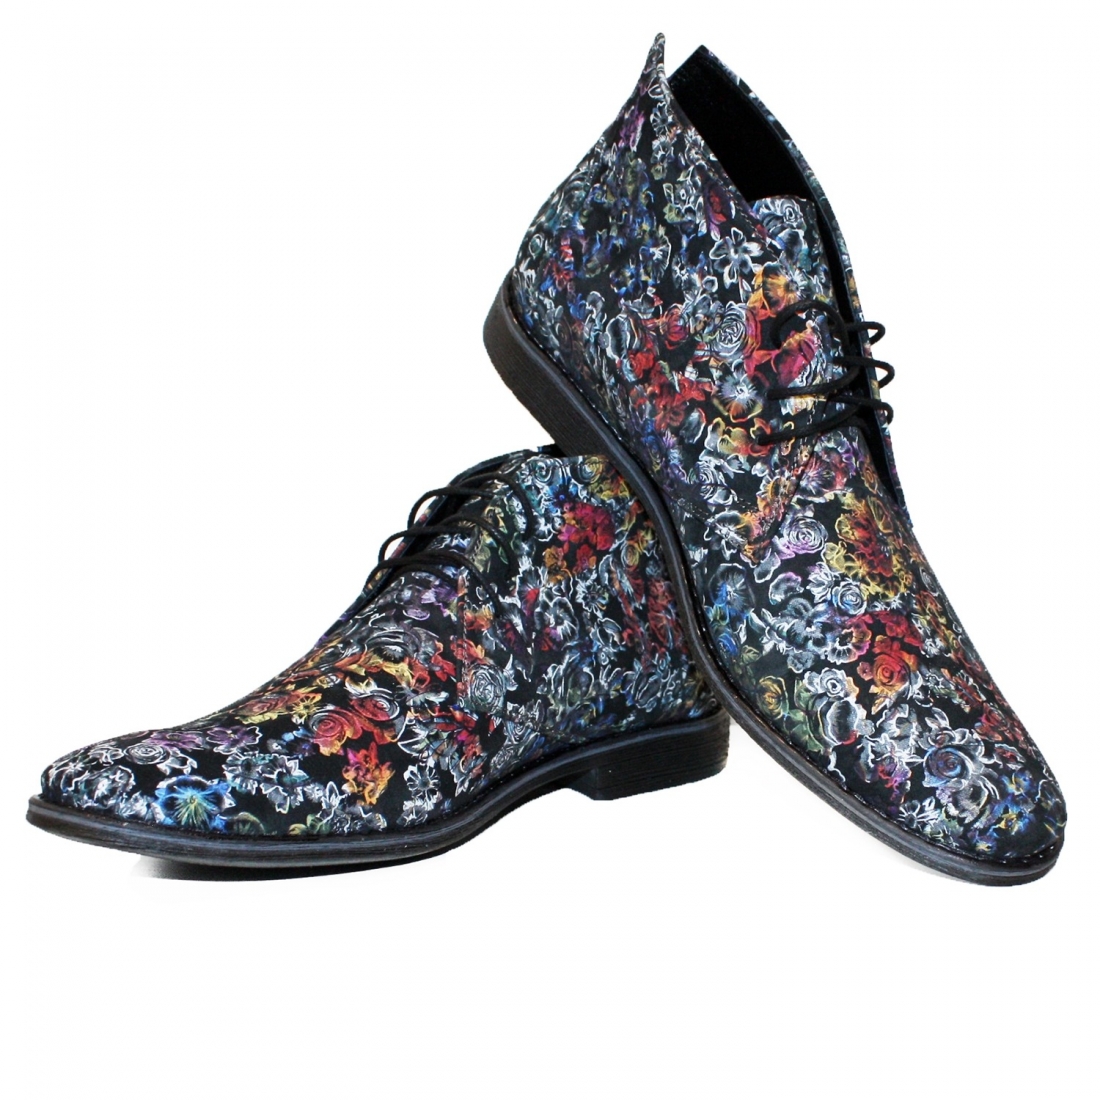 Modello Puciorro - Chukka Botas - Handmade Colorful Italian Leather Shoes